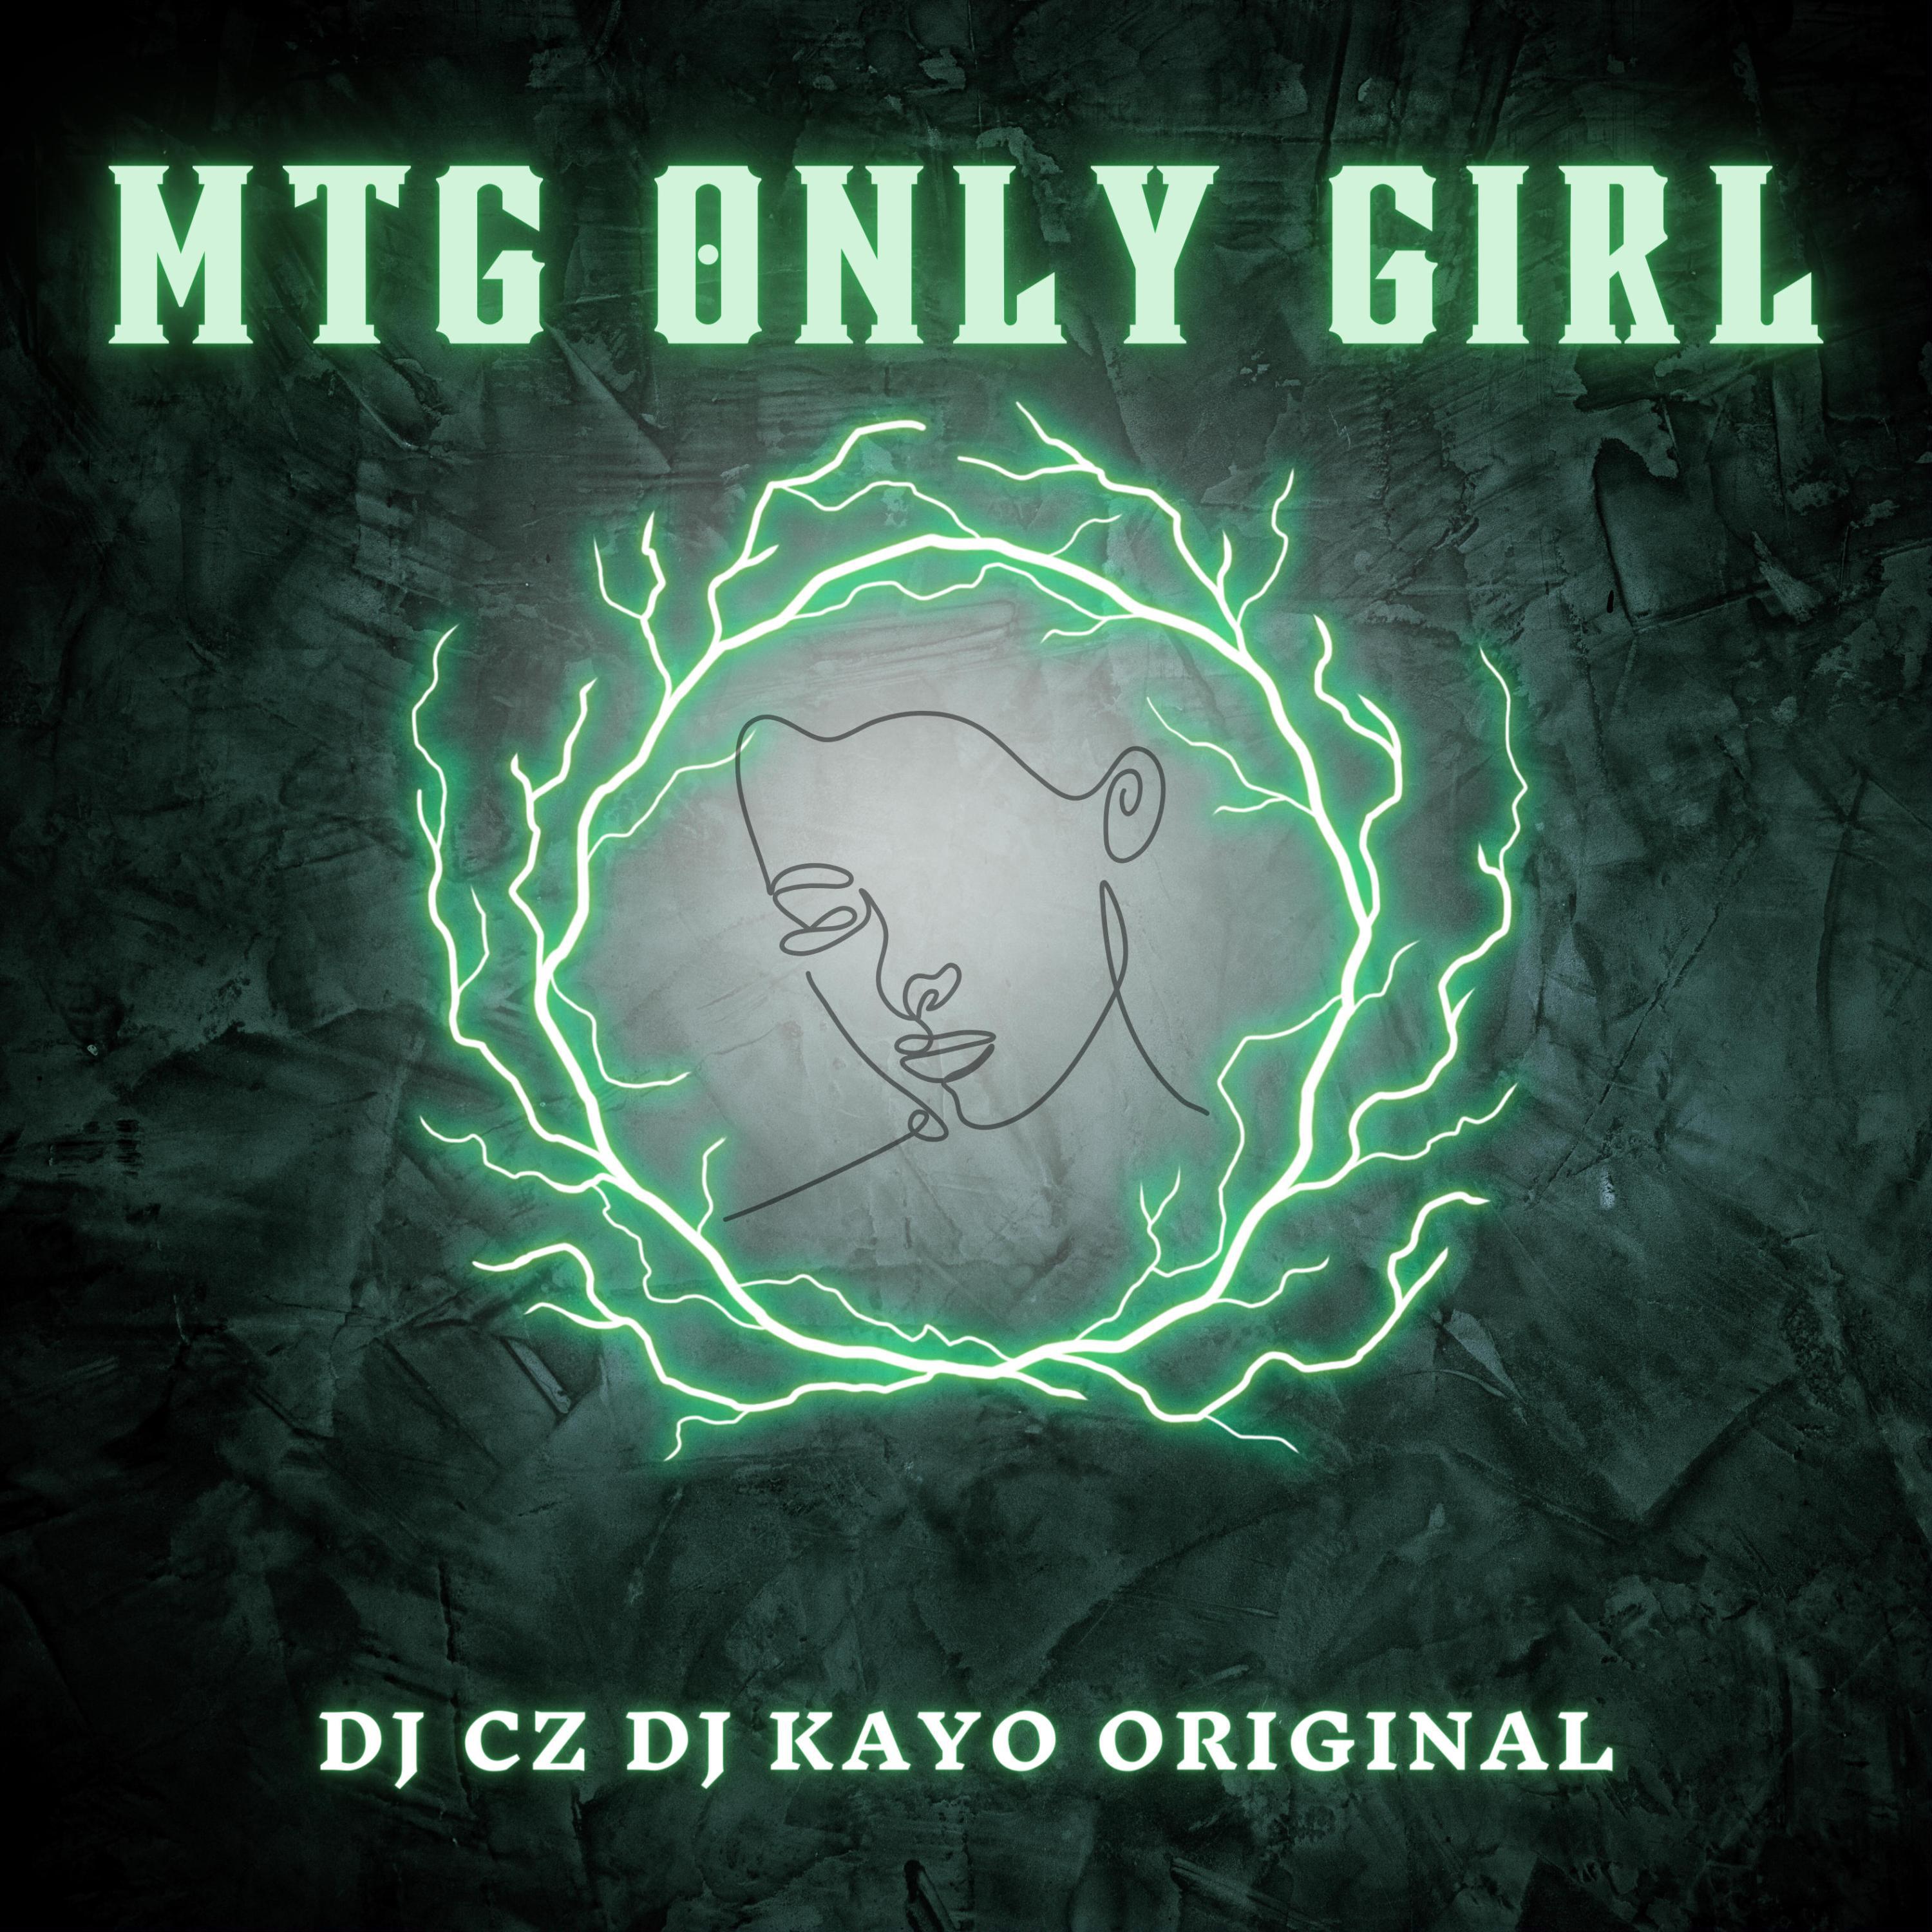 DJ CZ - MTG ONLY GIRL